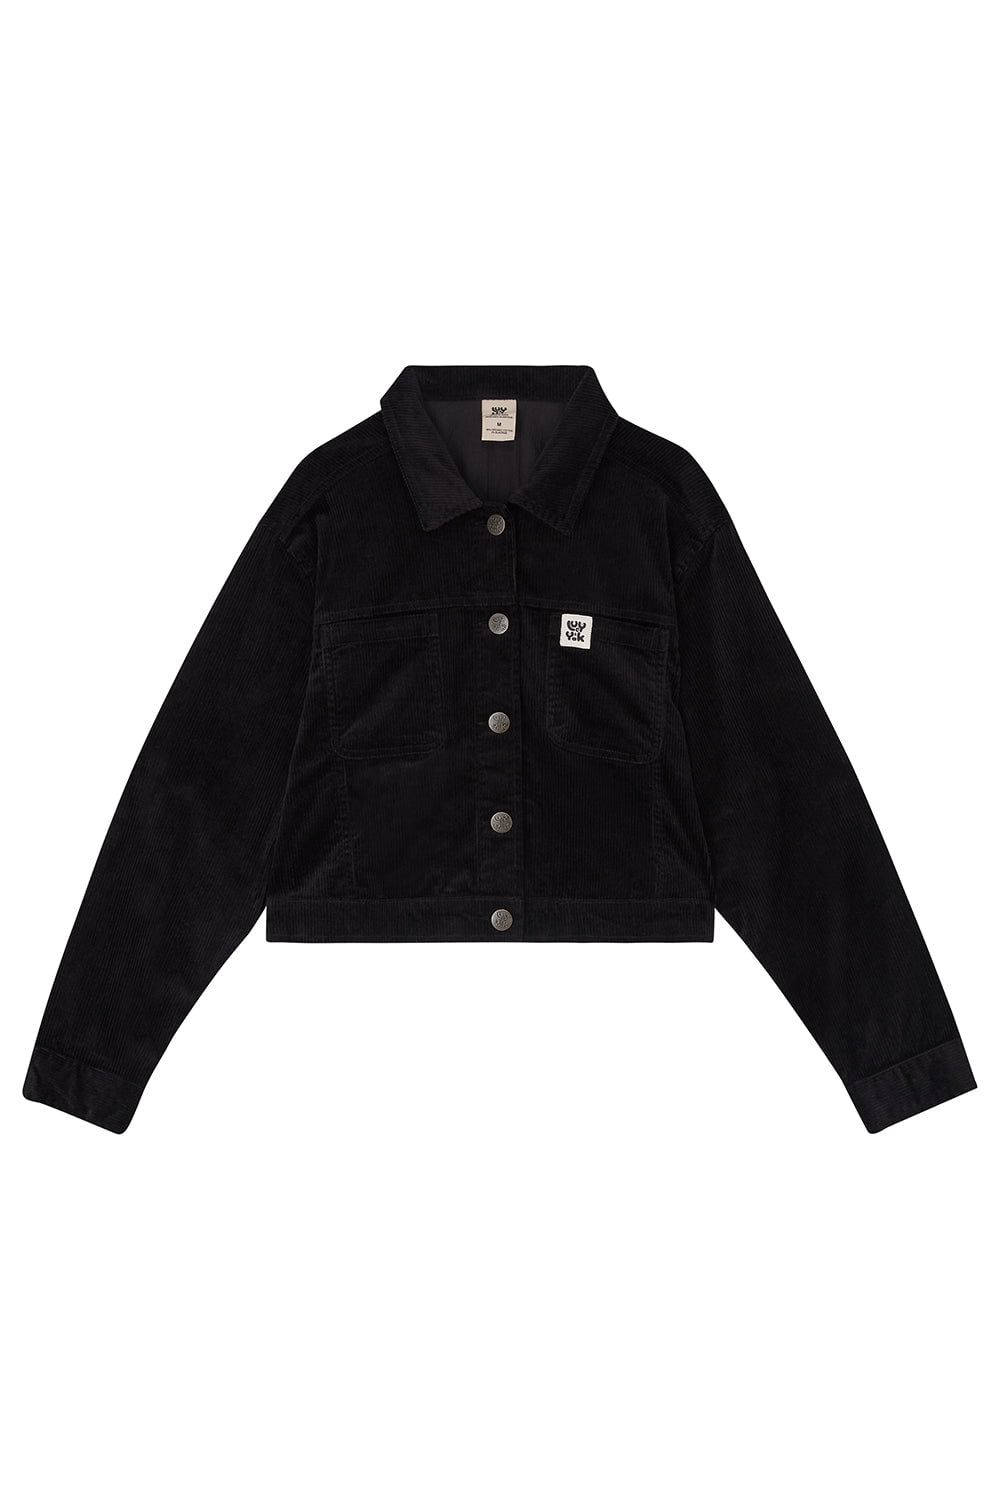 Lucy & Yak Coats & Jackets Roxy Cropped Jacket: ORGANIC CORDUROY- Black